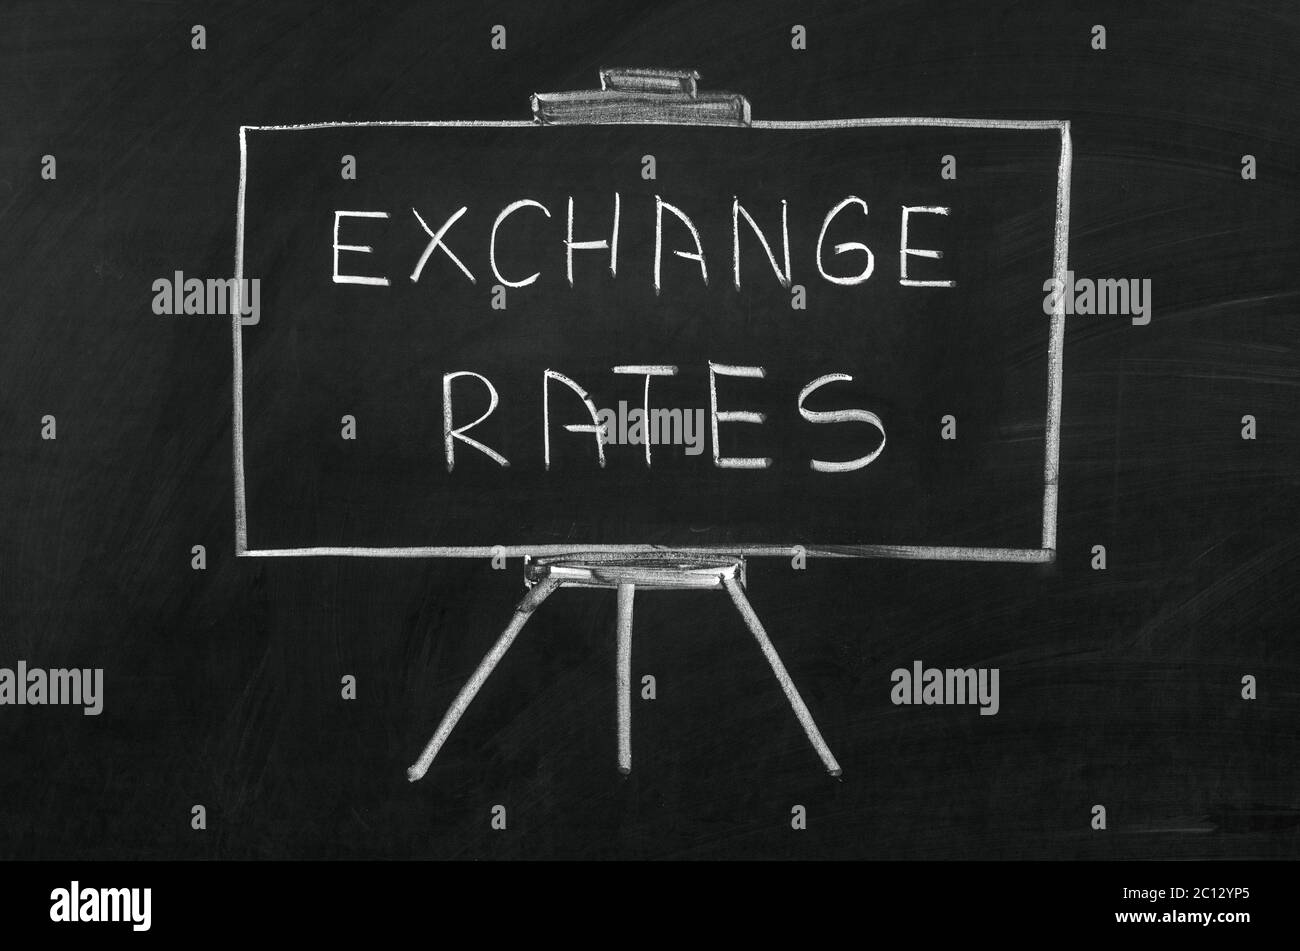 Exchange rates writed on blackboard with chalk Stock Photo